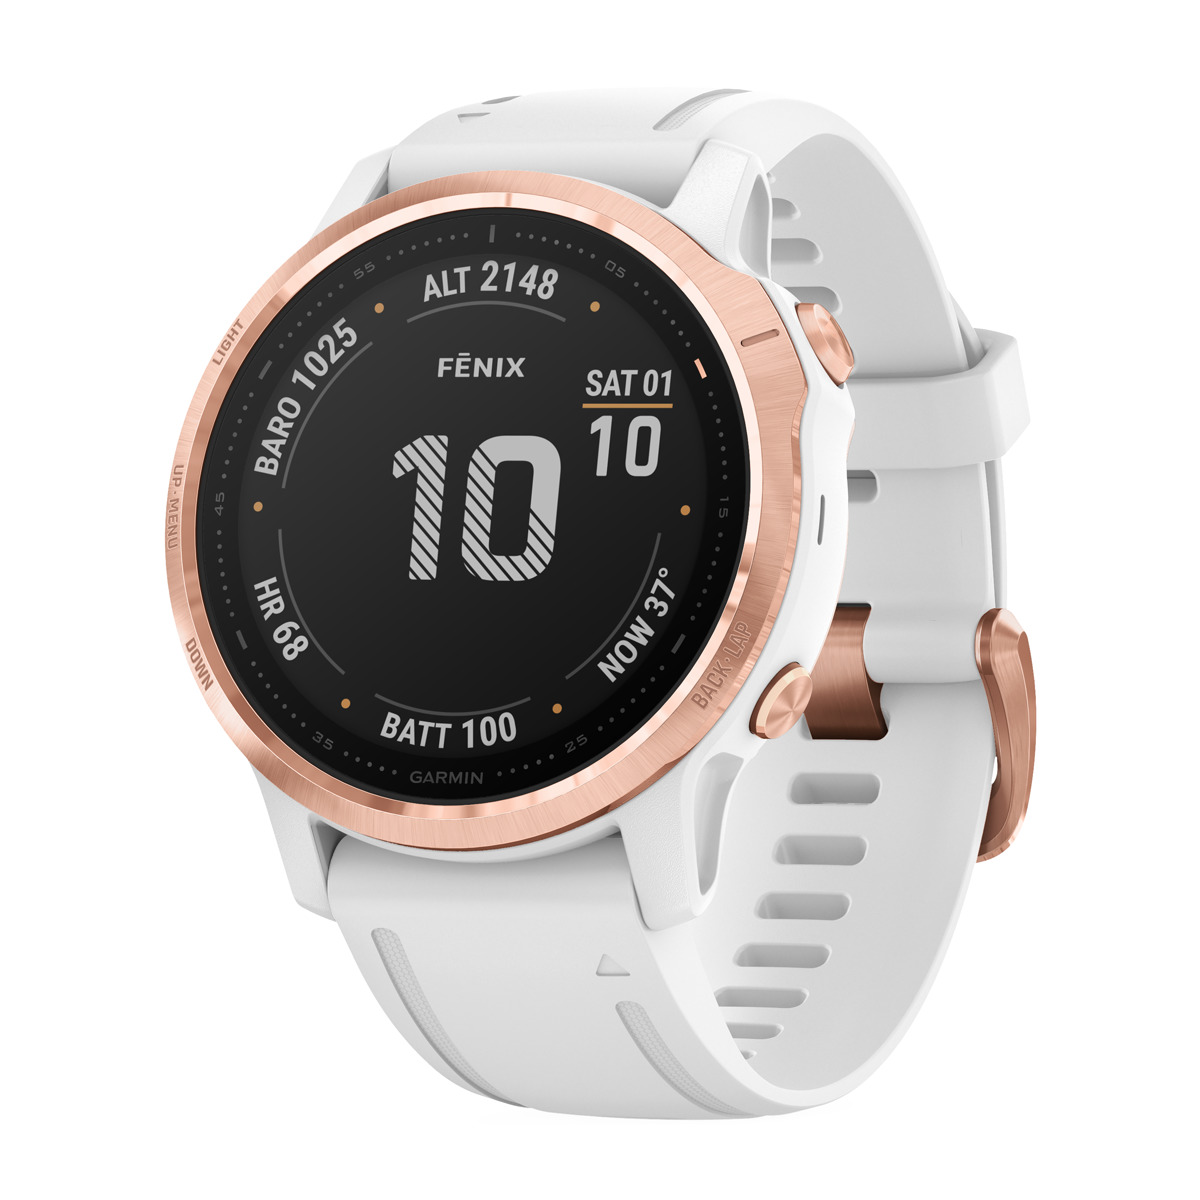 Reloj deportivo - Garmin Fenix 6S Pro, Gold/Blanco, Rose, GPS, Sensores ABC, Aplicaciones deportivas